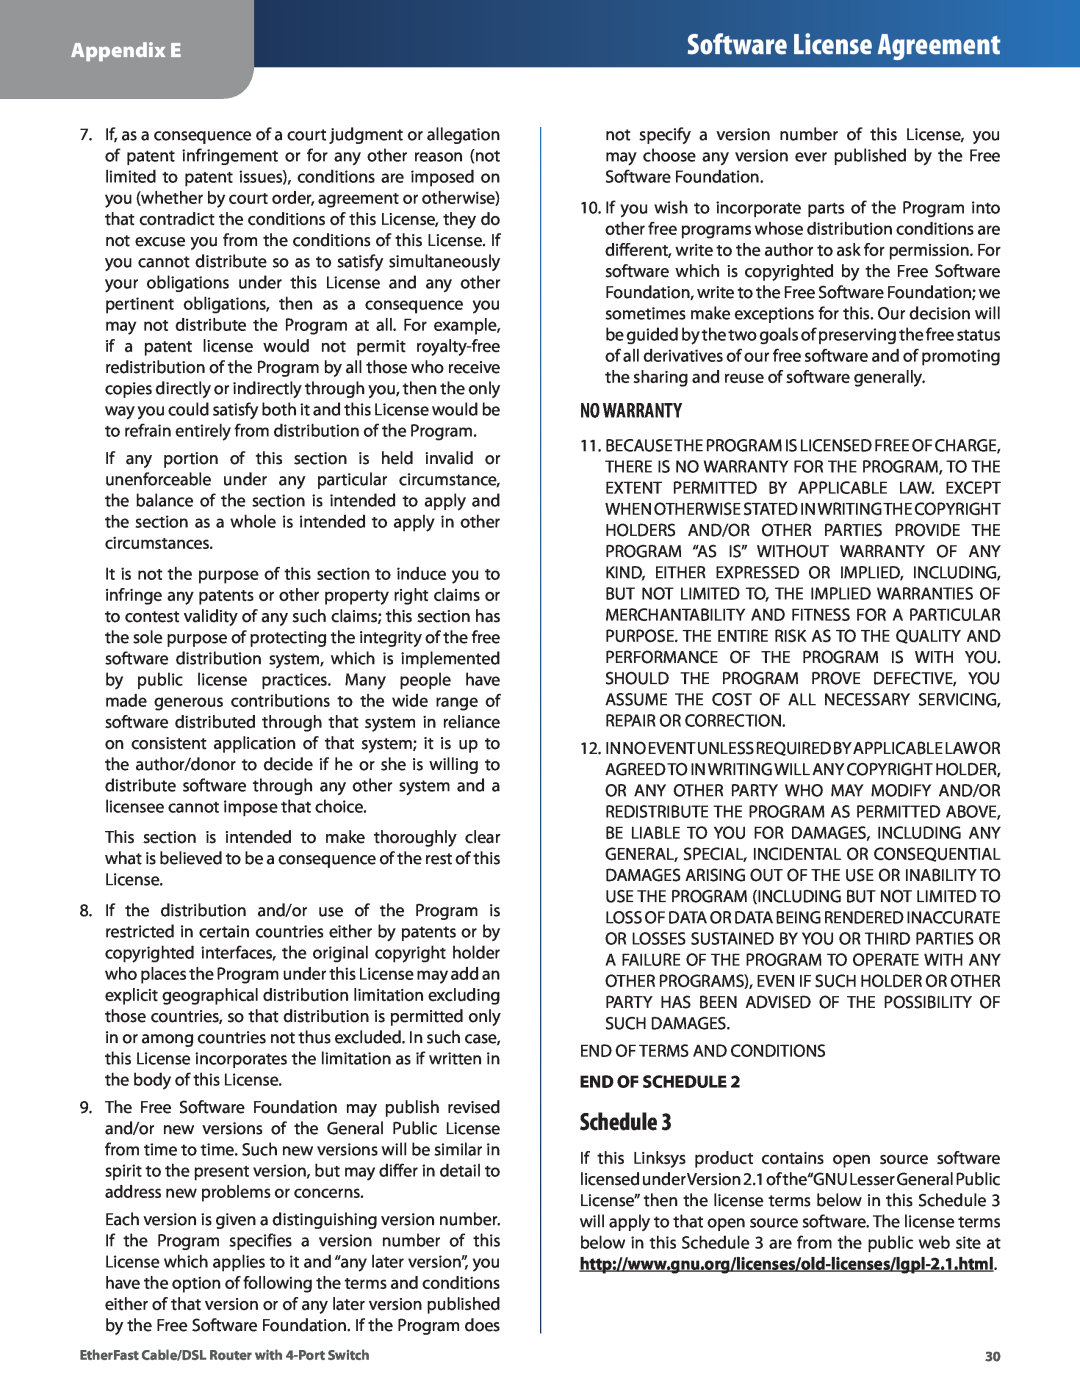 Honeywell HEMS II manual No Warranty, Software License Agreement, Schedule, Appendix E 